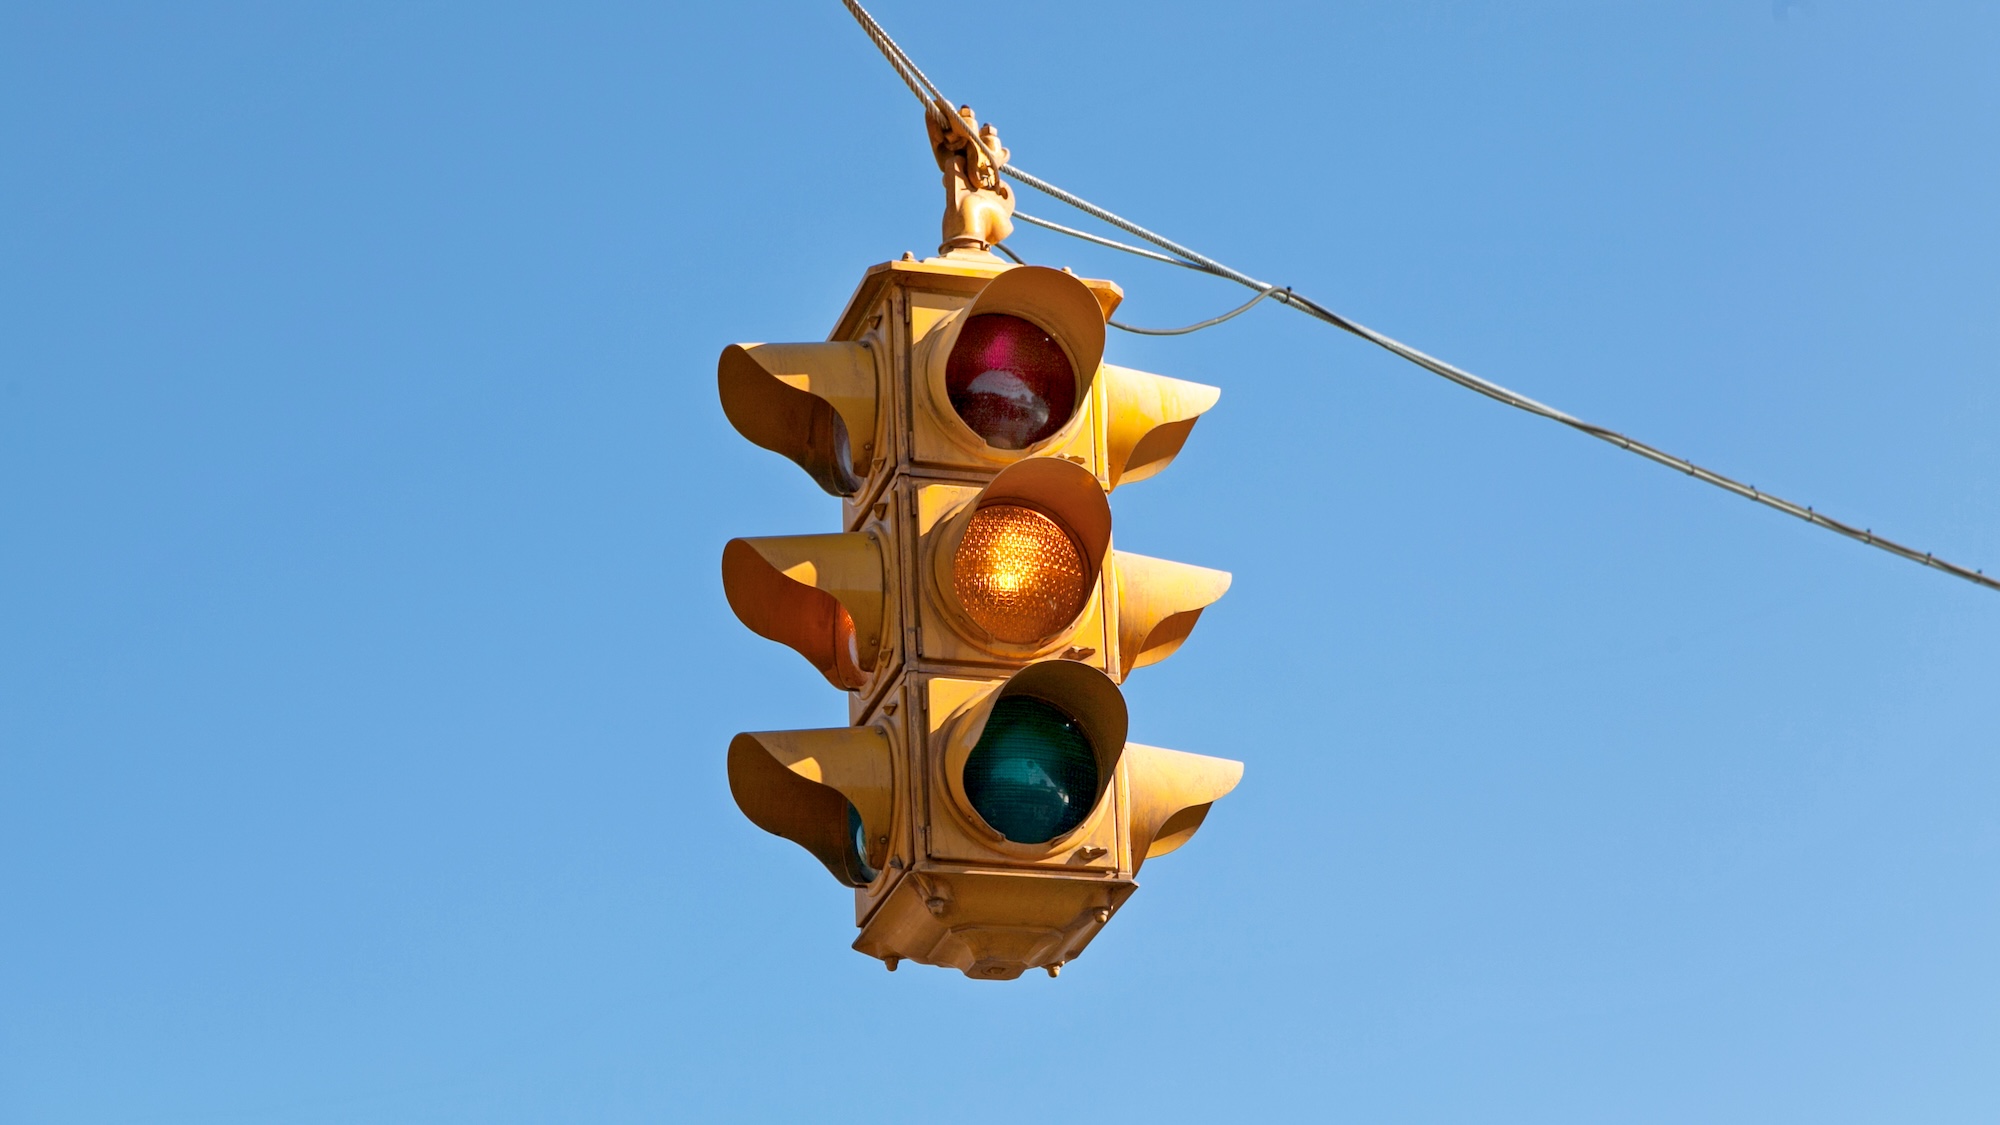 Traffic light flashing yellow signal